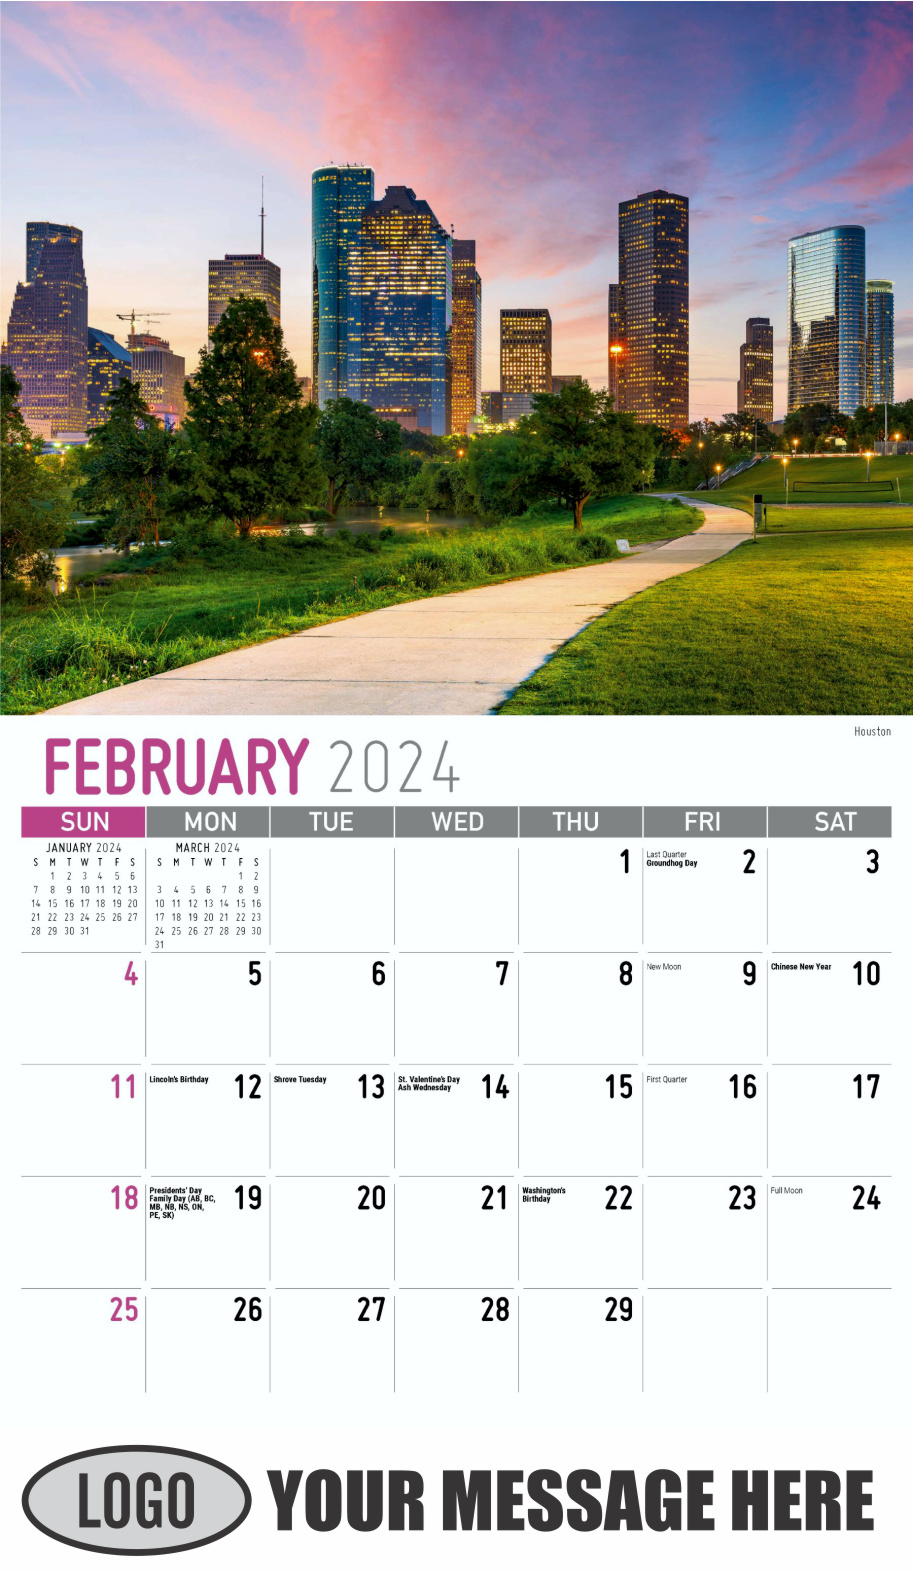 Scenes of Texas 2024 Business Advertising Calendar - February